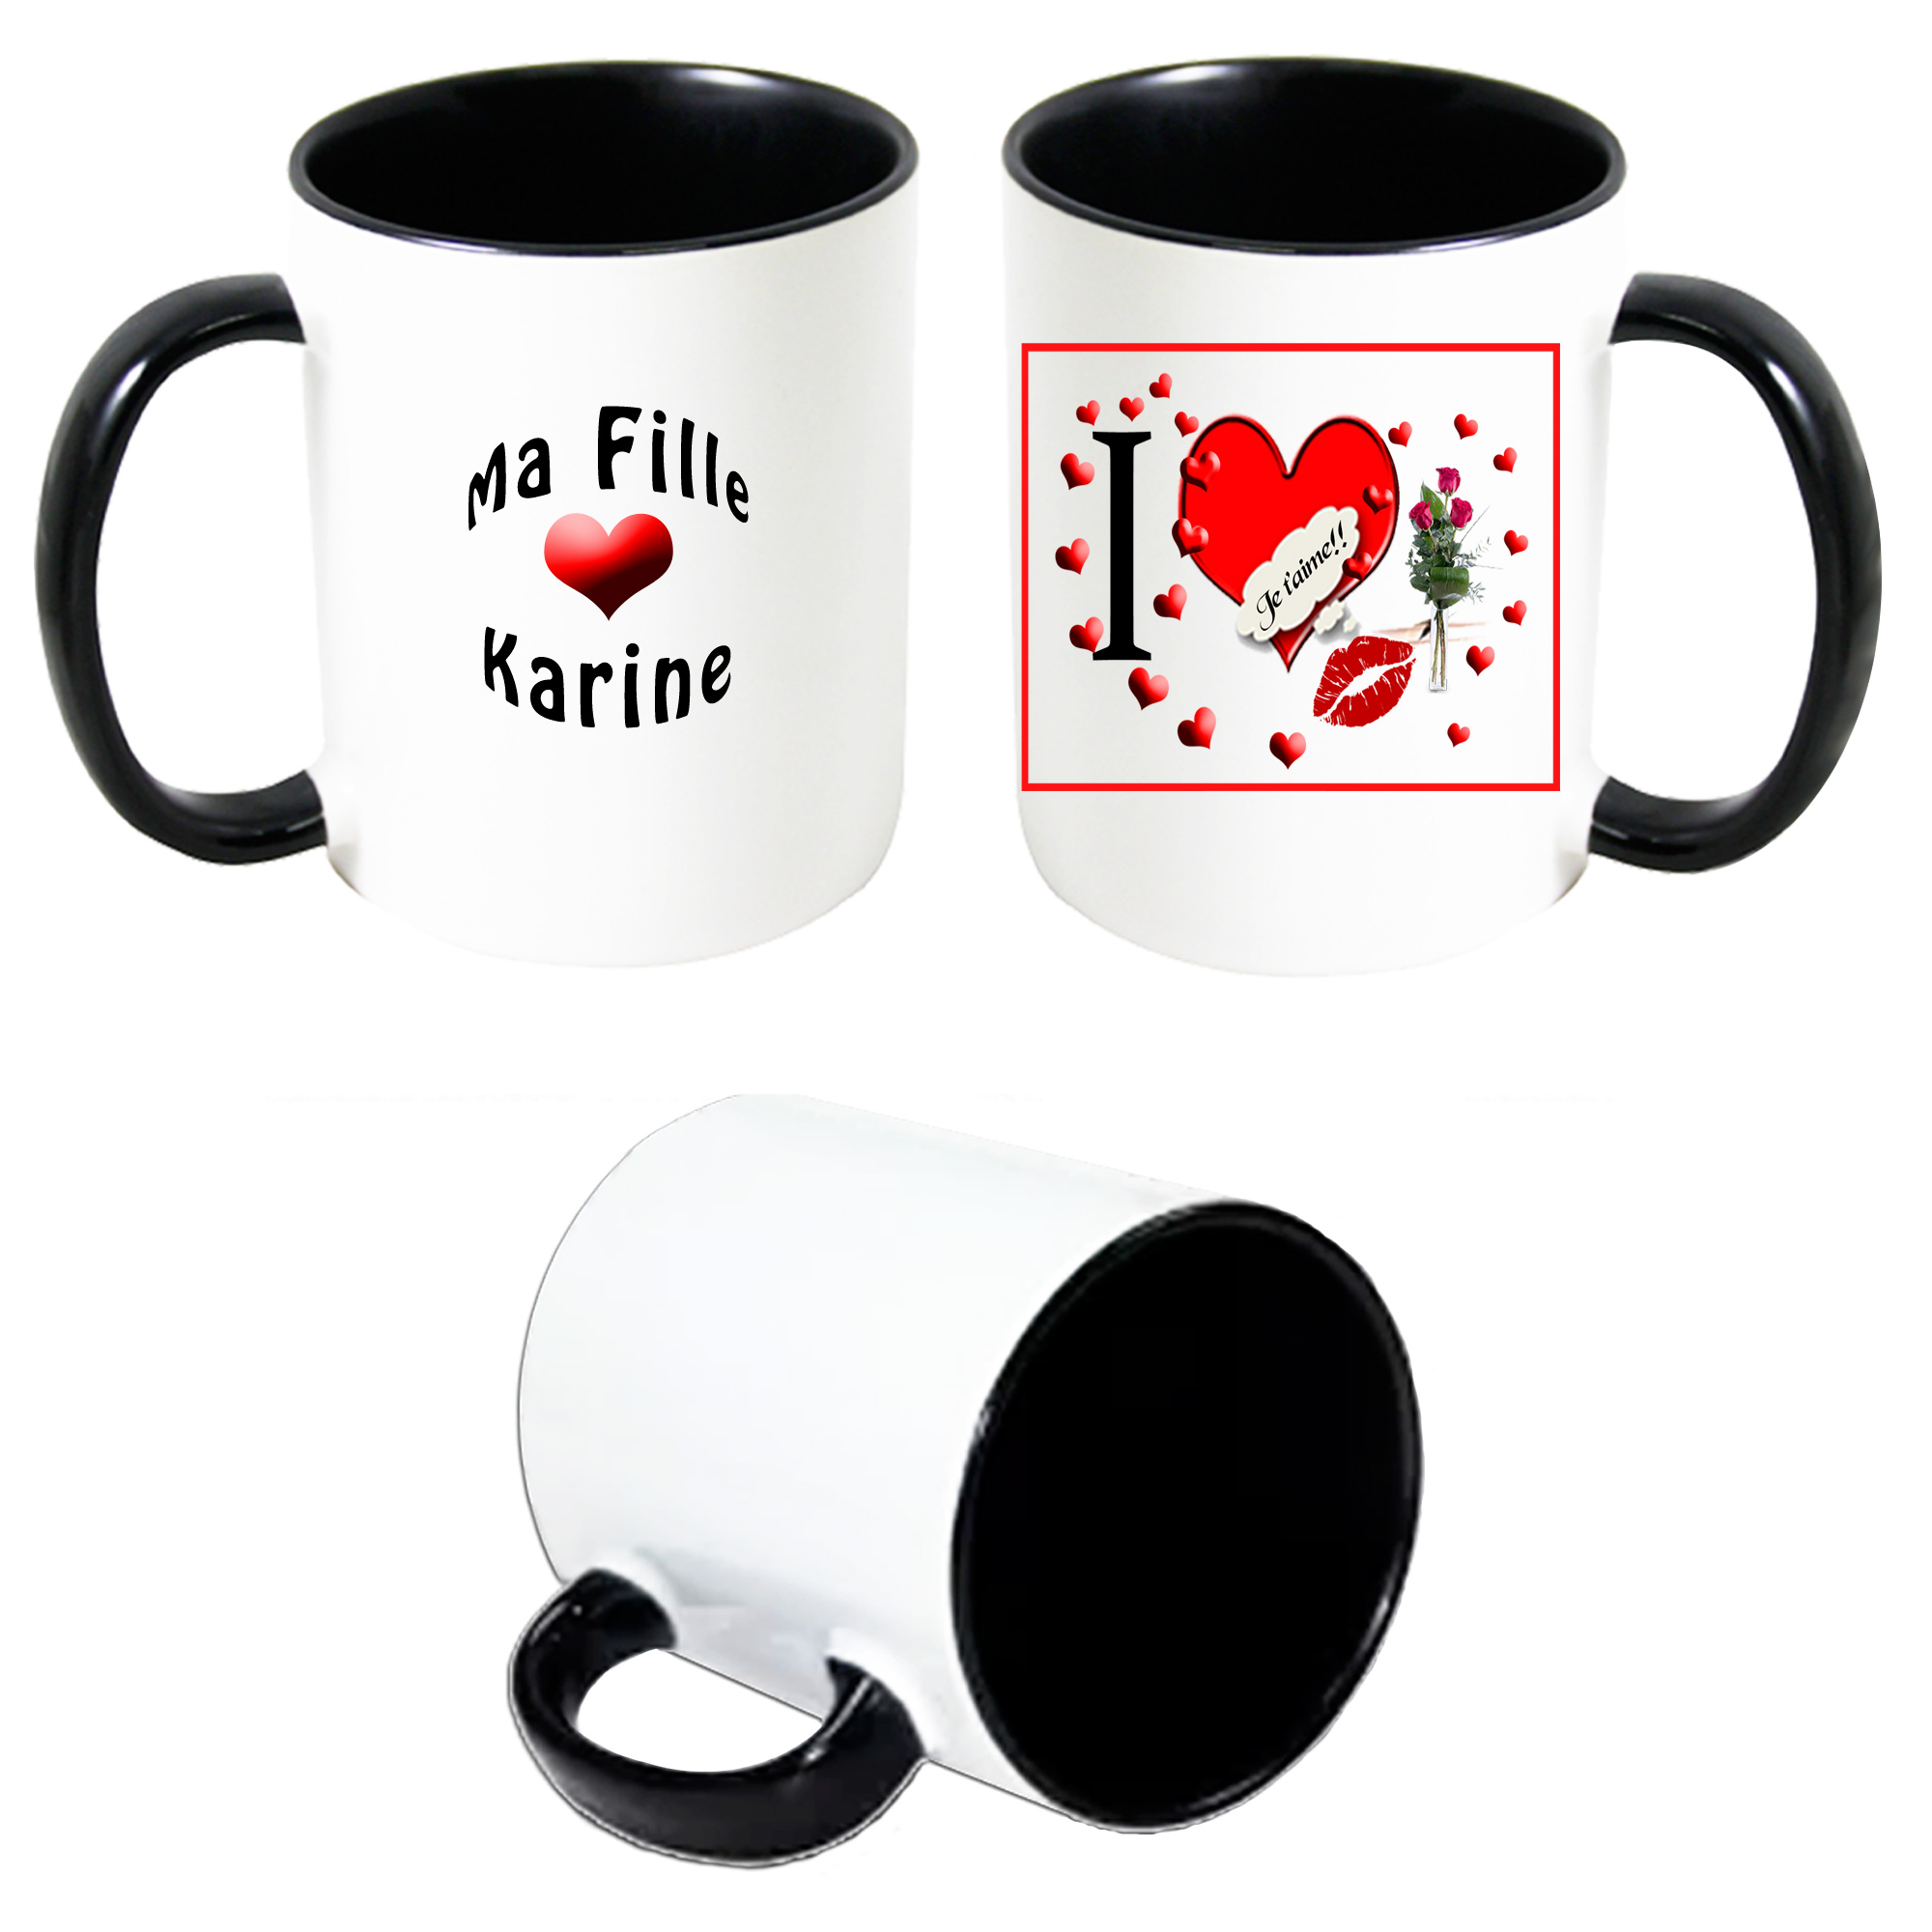 mafille-famille-mug-noir-personnalisable-coeur-love-amour-phrase-rectangle-prenom-karine